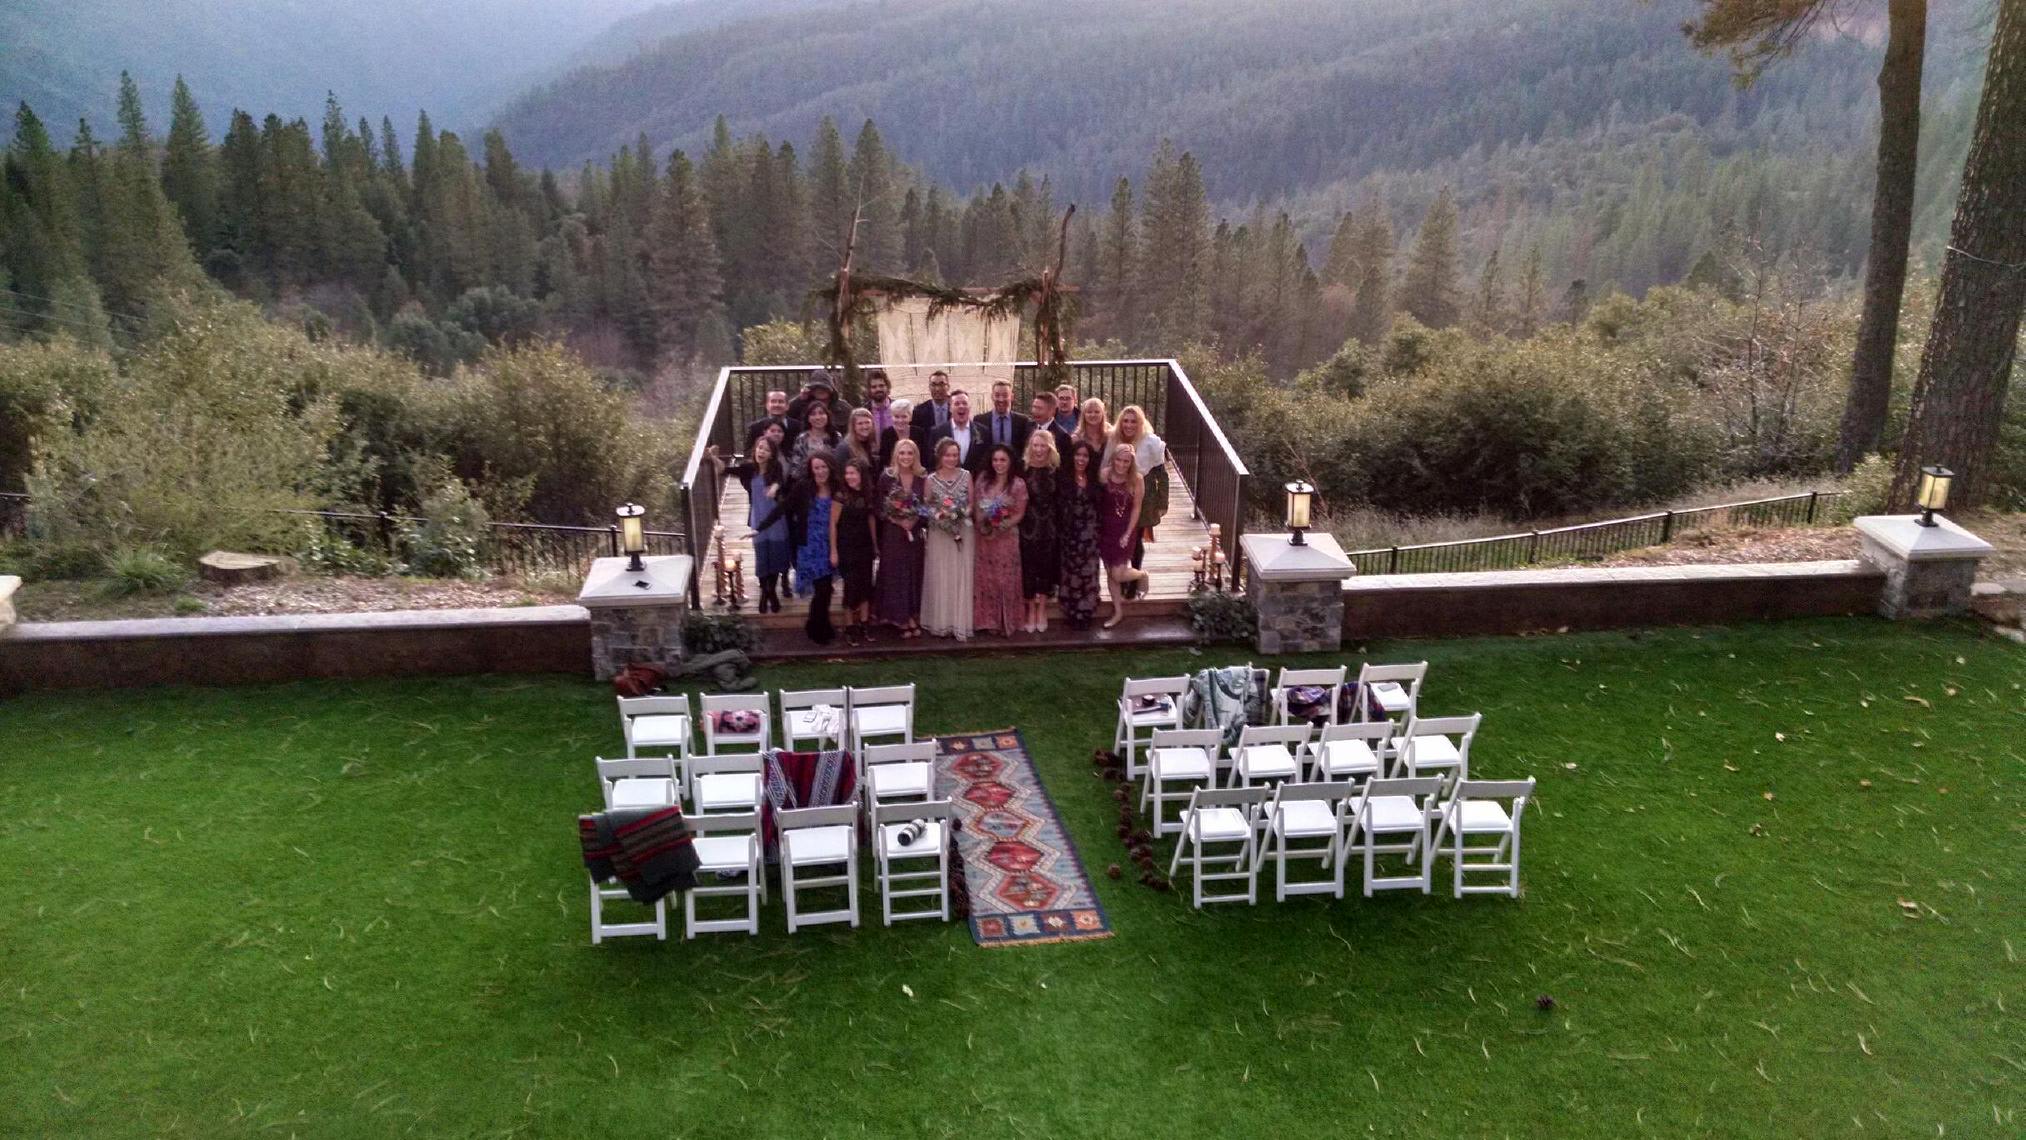 An intimate anti-wedding at an outdoor mountain venue.